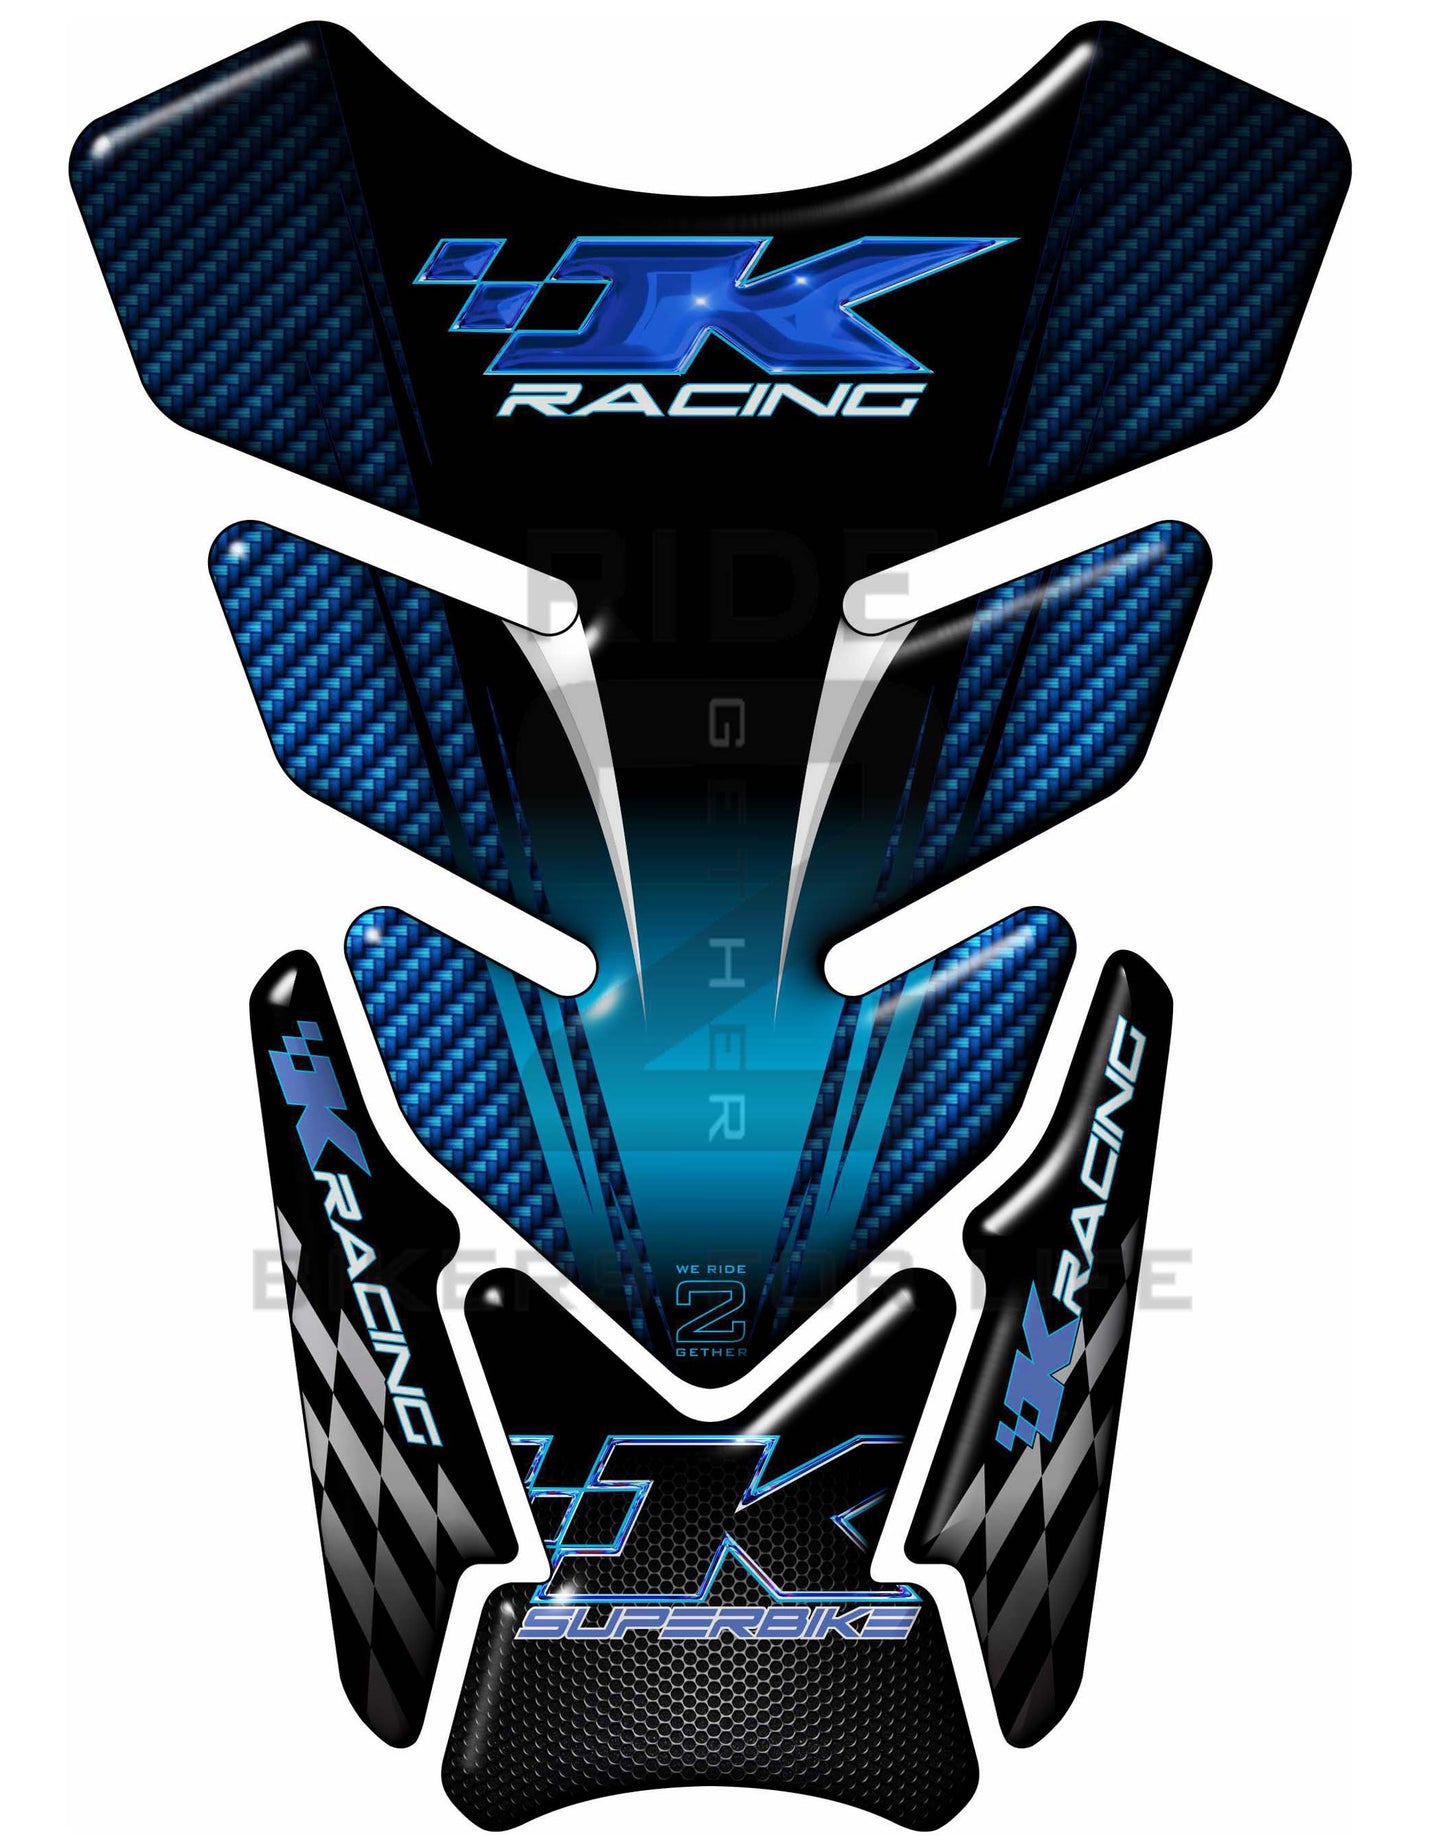 Kawasaki K Racing Blue and Black Carbon Fibre SuperBike Tank Pad / Protector